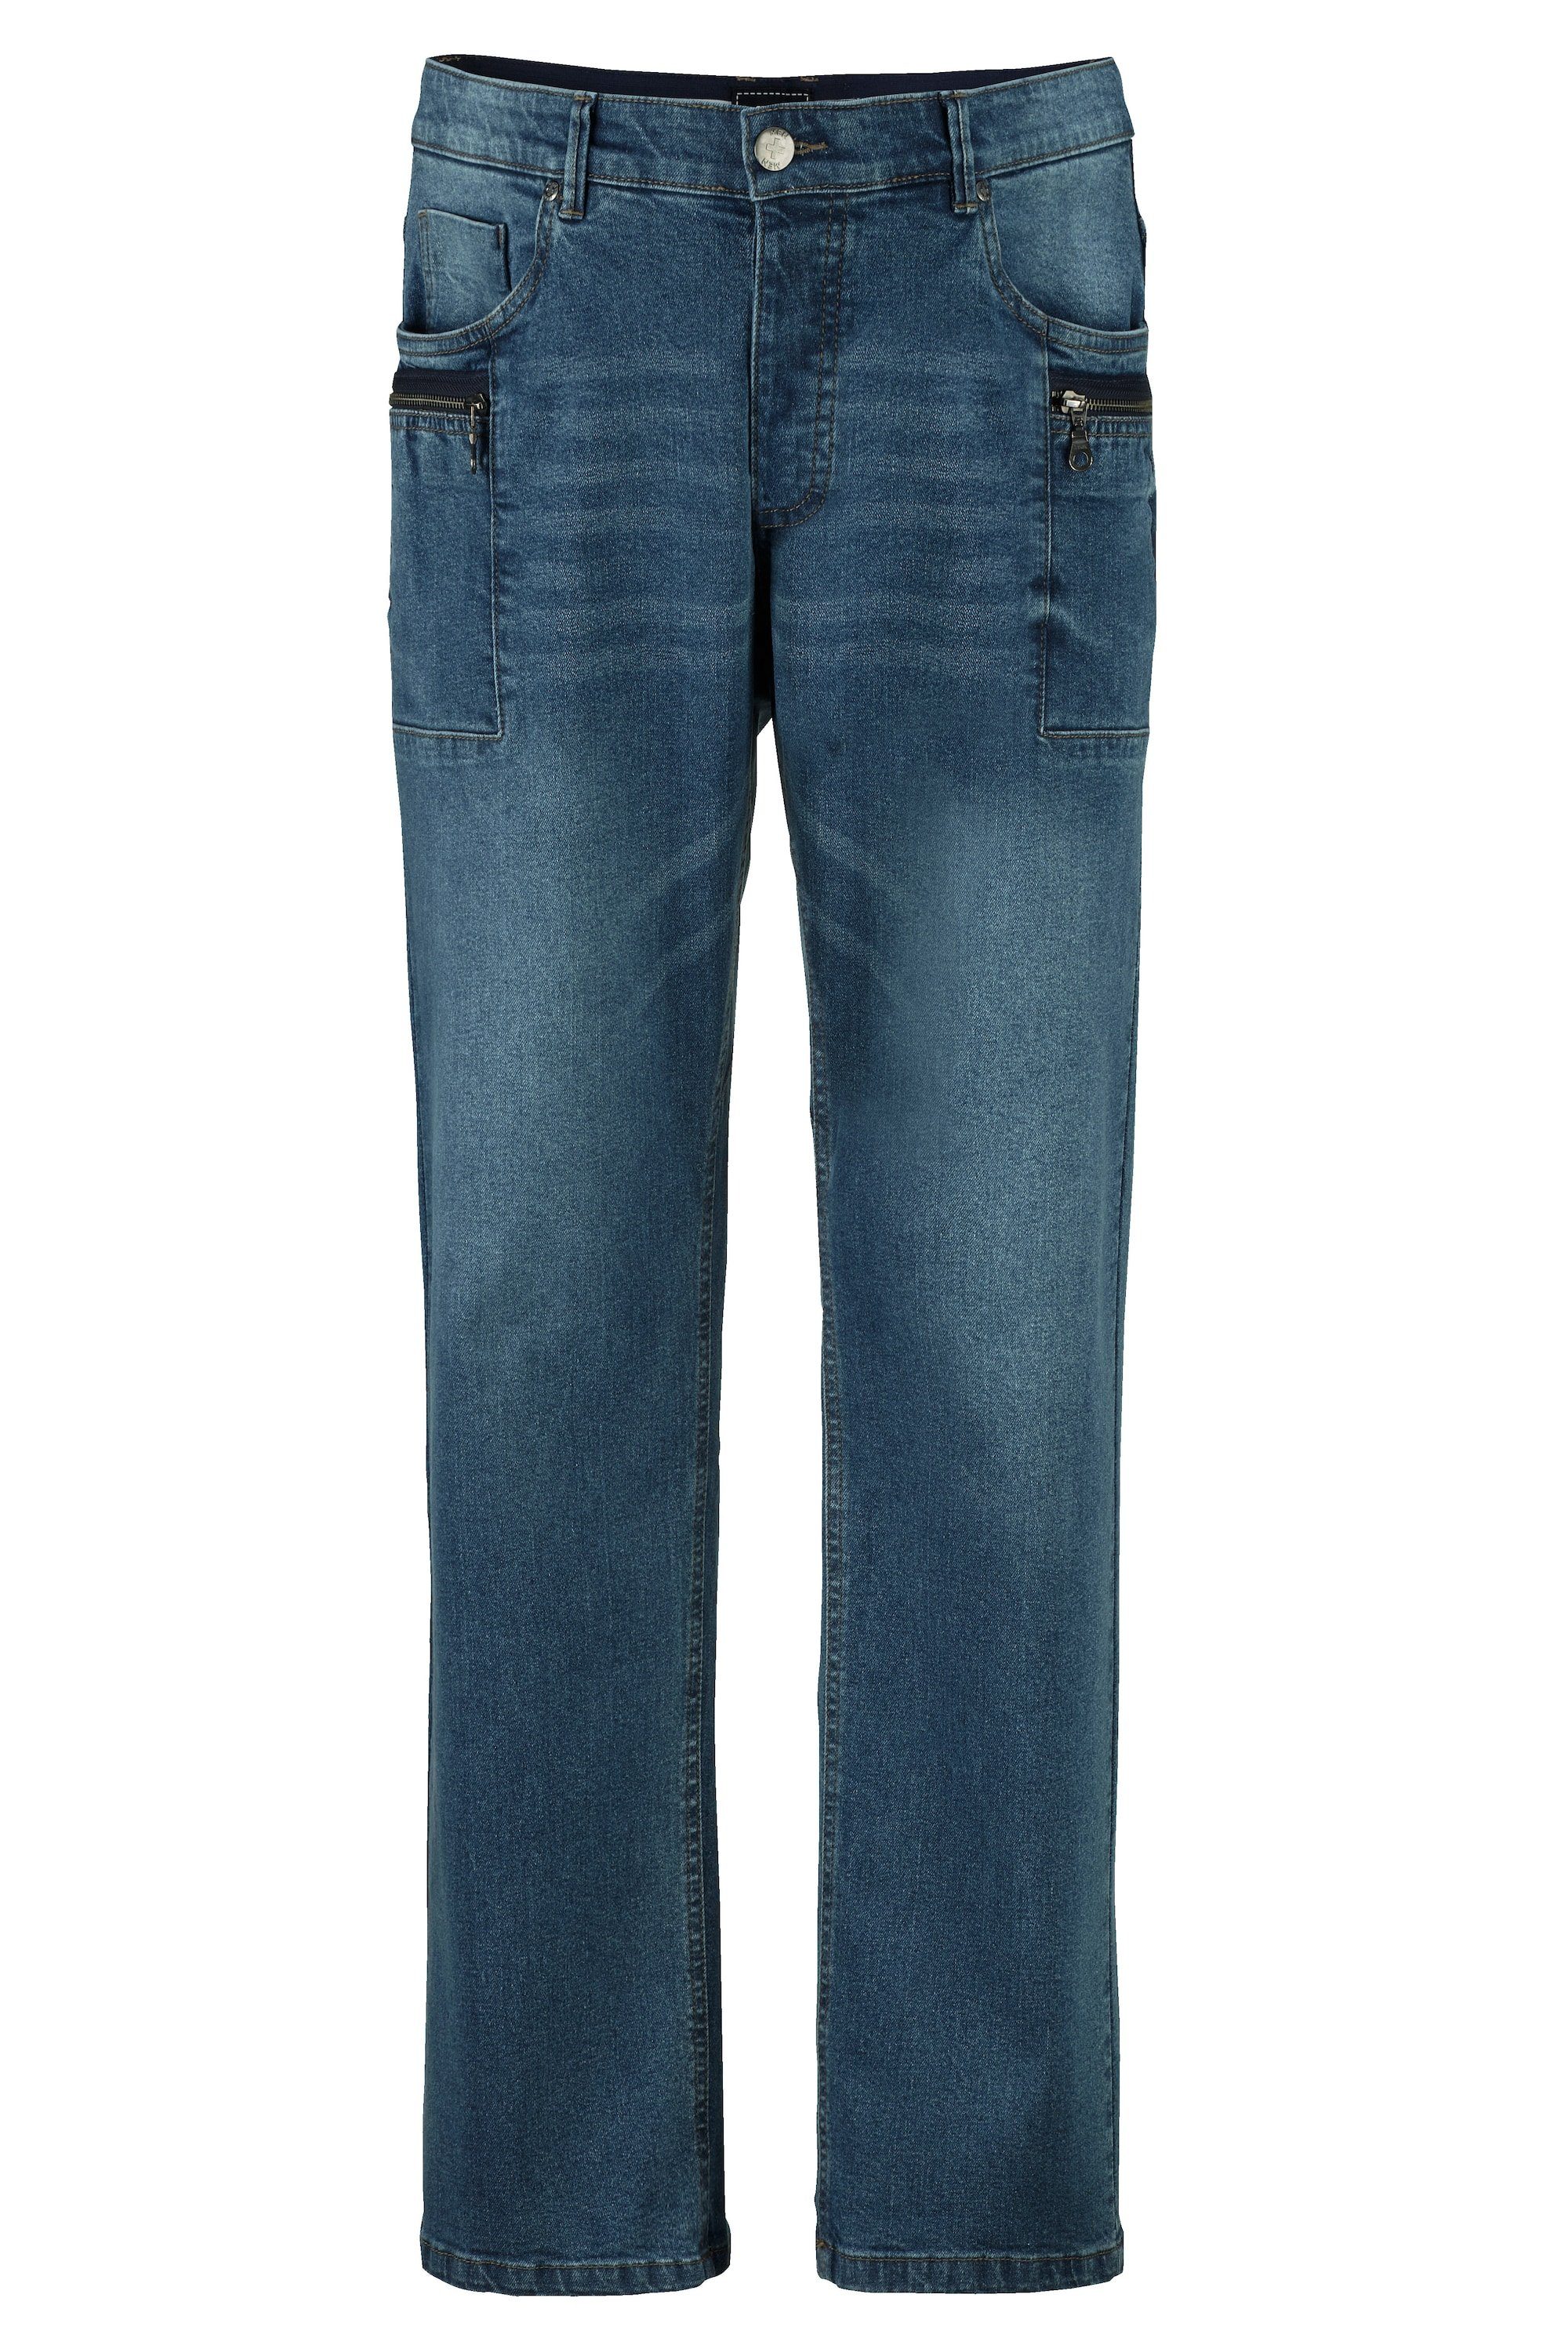 Men Jeans Spezialschnitt 5-Pocket-Jeans hellblau Plus